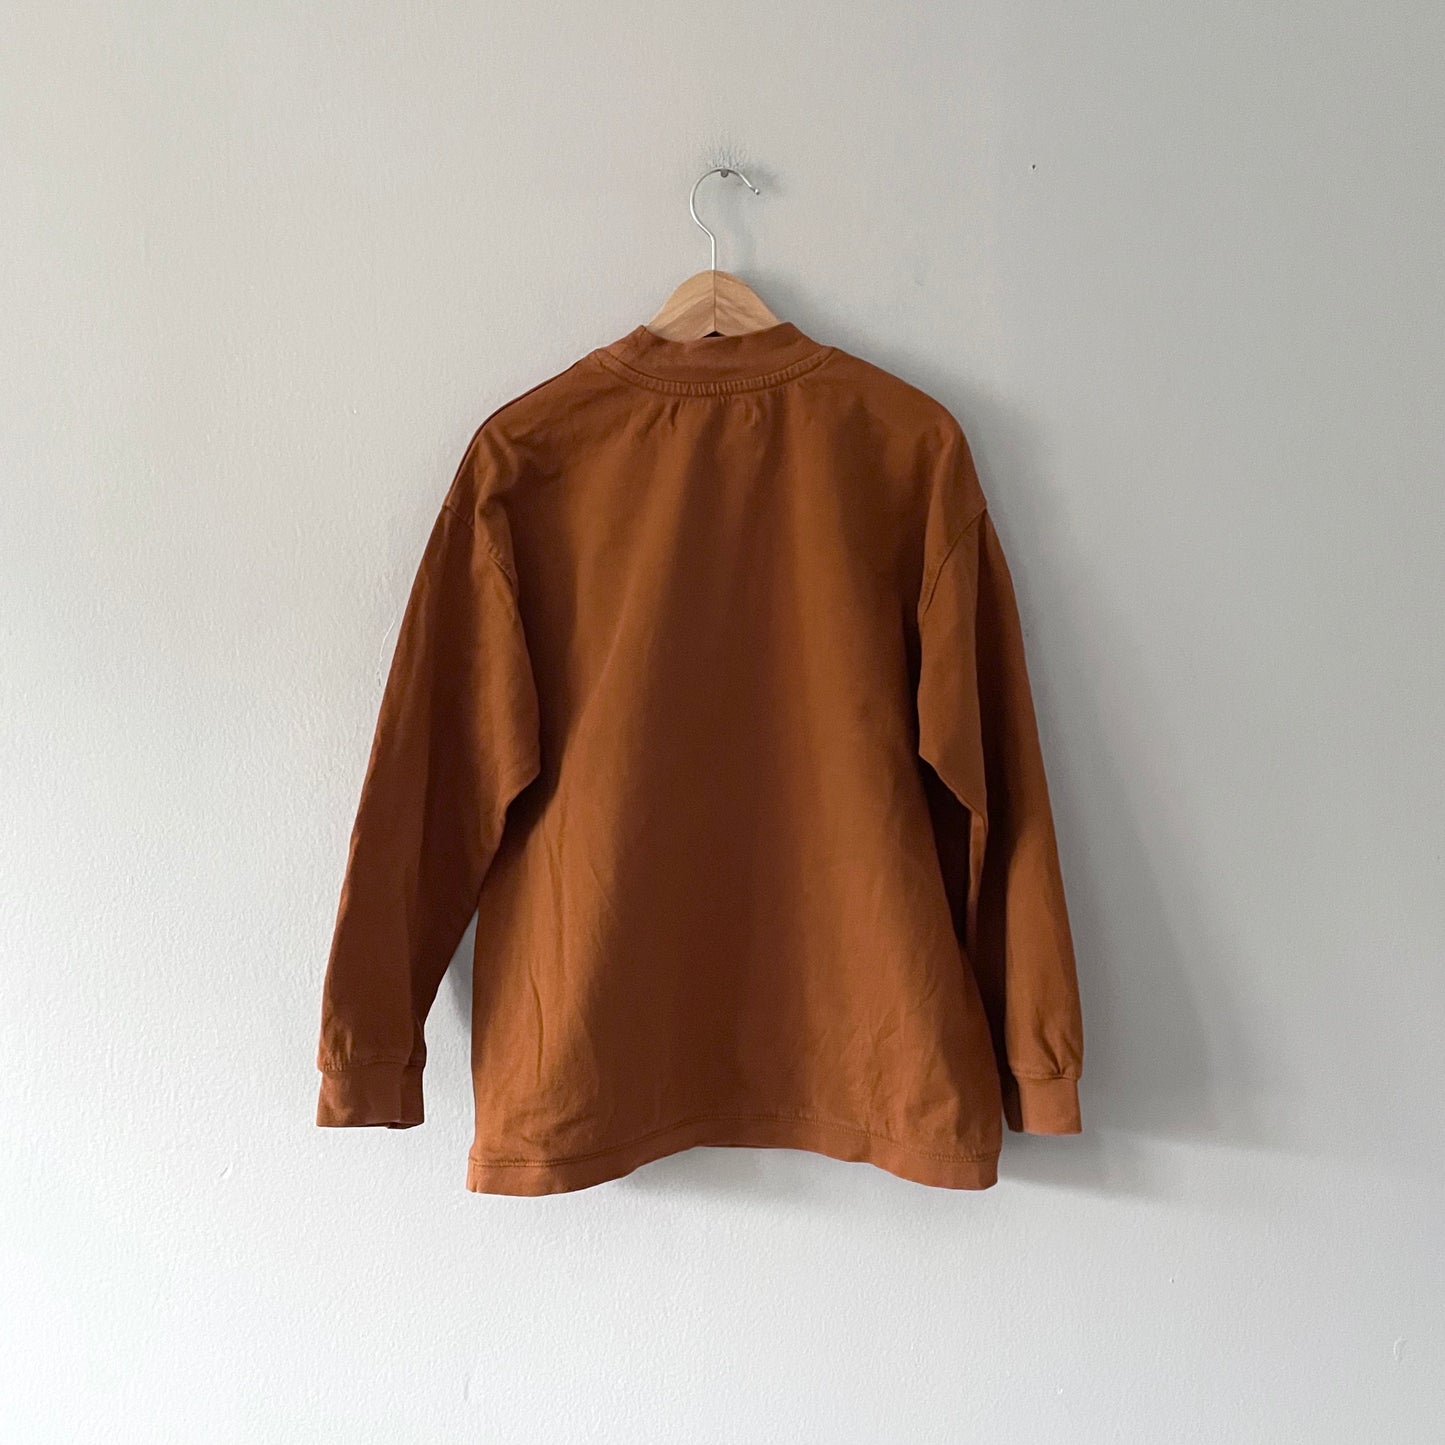 Zara / Brown long sleeve cotton top / 8Y